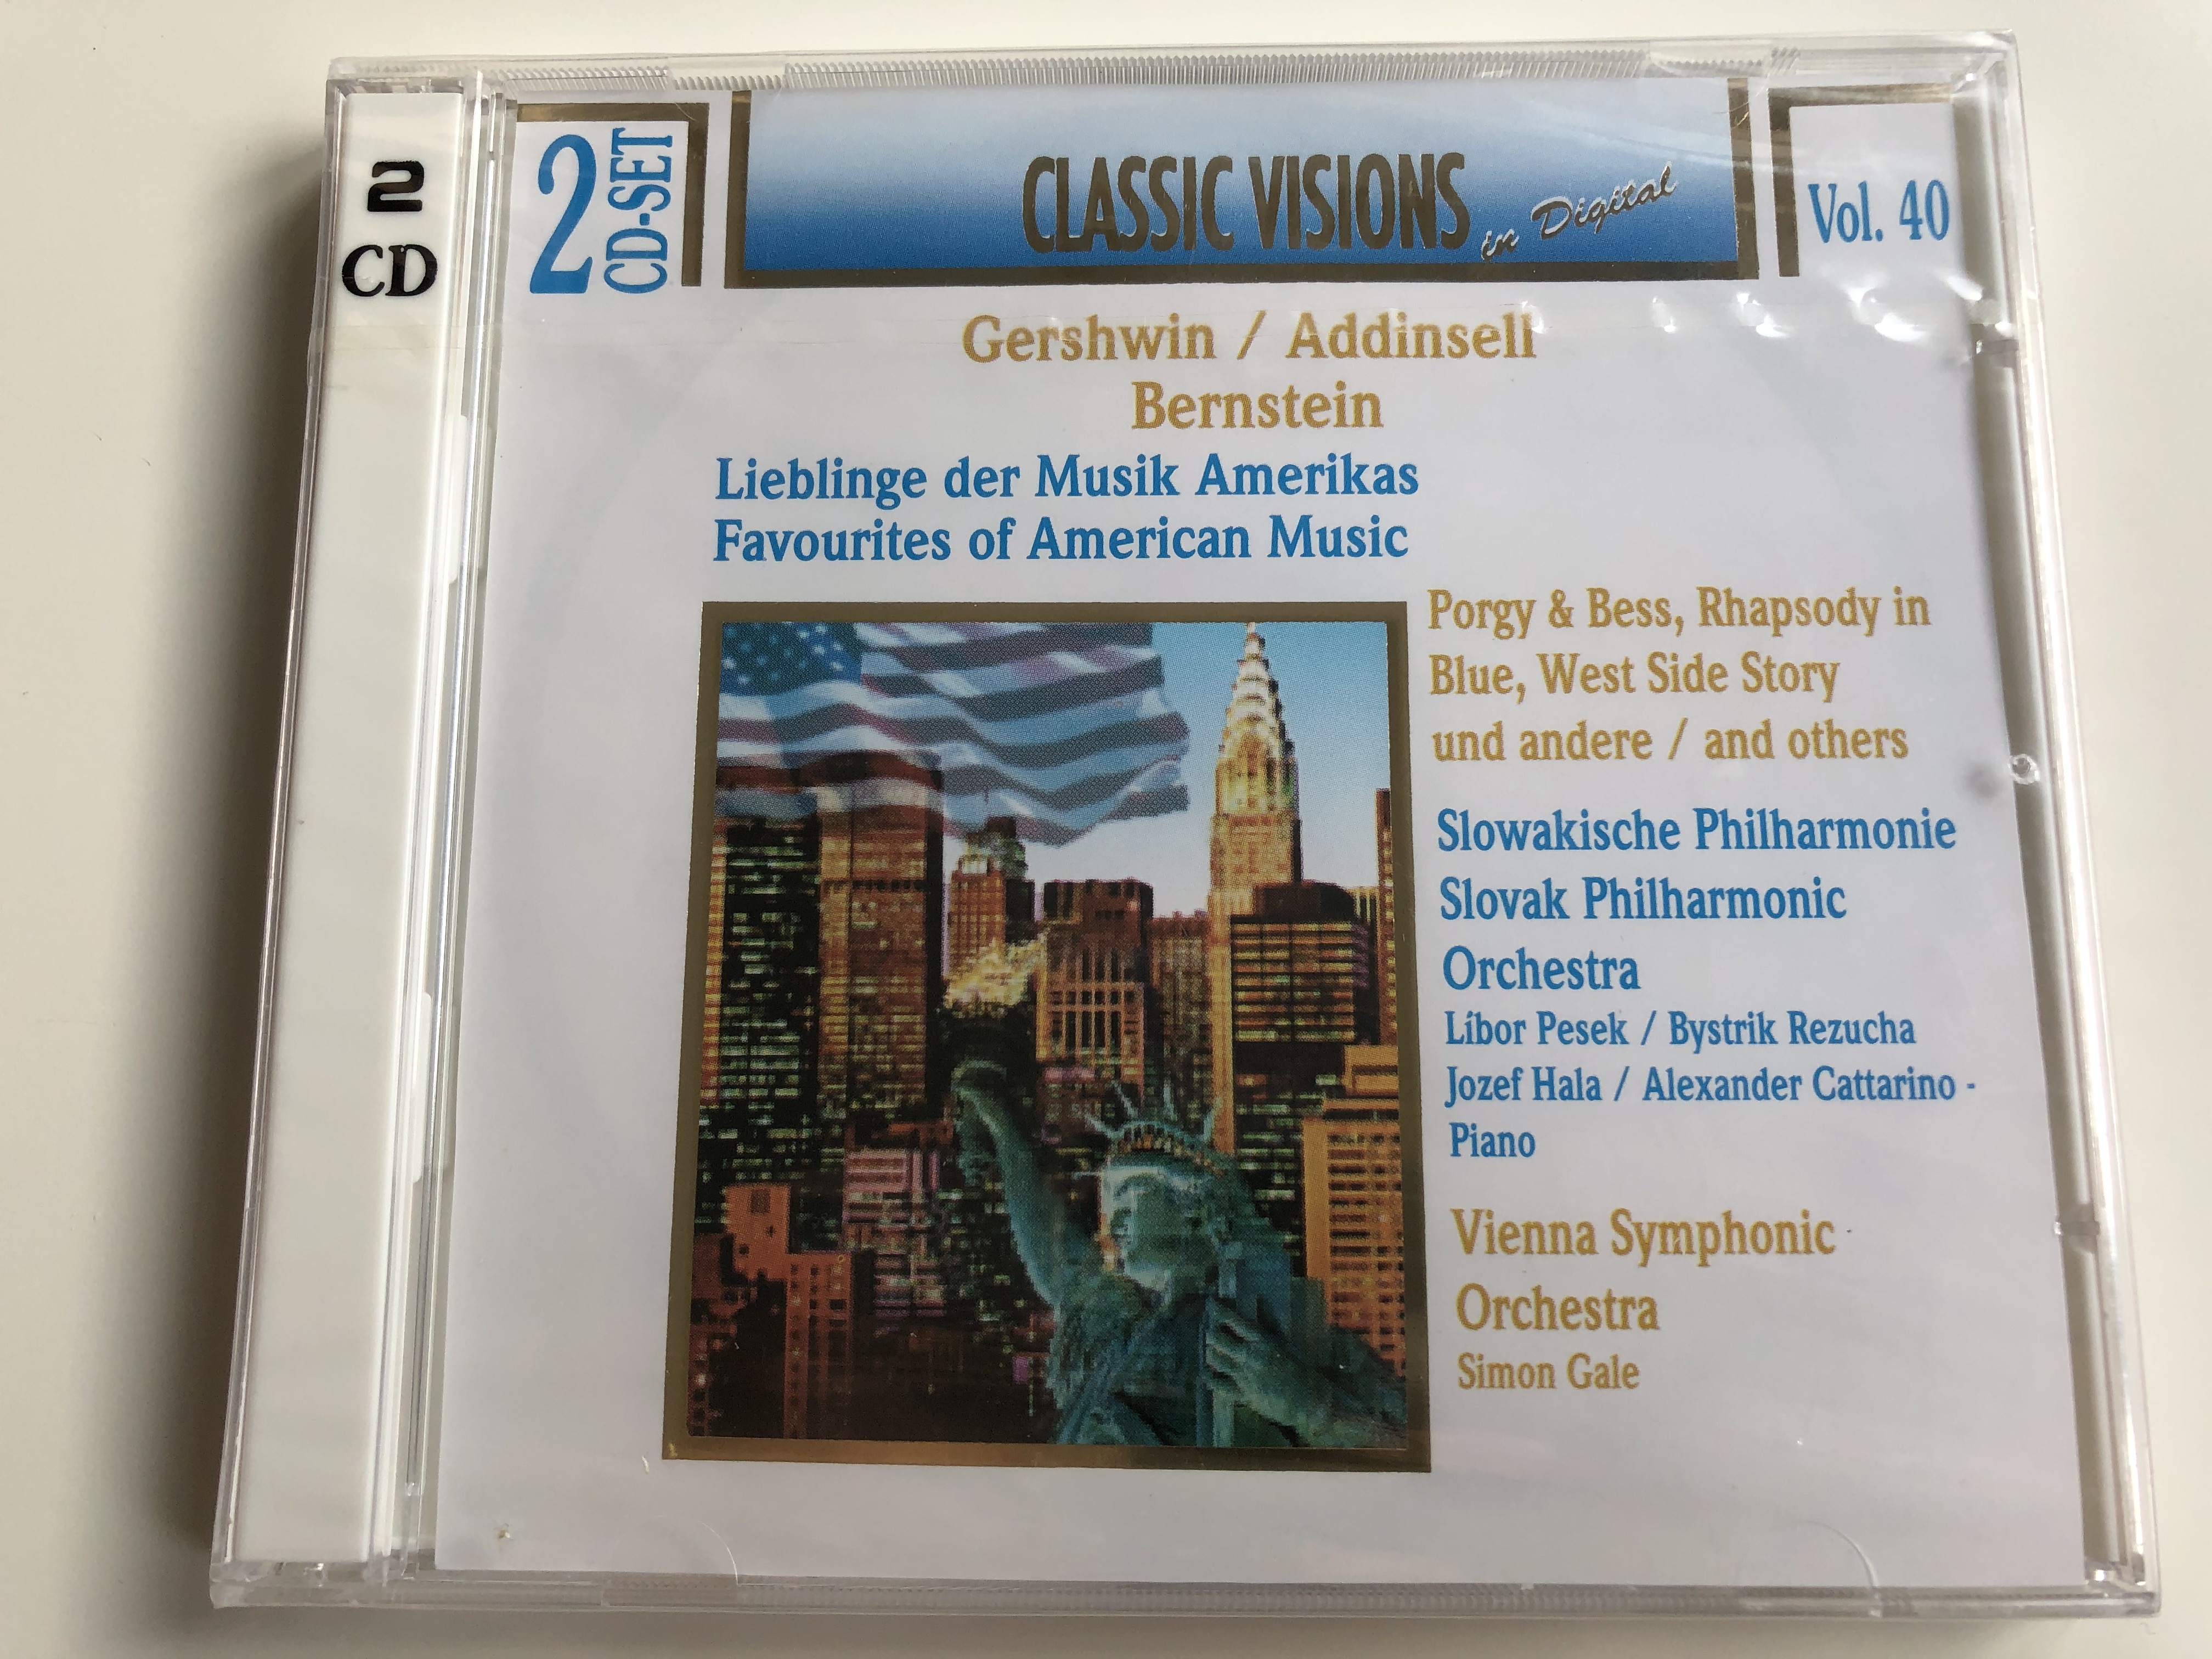 classic-visions-in-digital-vol.-40-gershwin-addinsell-bernstein-lieblinge-der-musik-amerikas-favourites-of-american-music-porgy-bess-rhapsody-in-blue-west-side-story-und-andere-and-o-1-.jpg